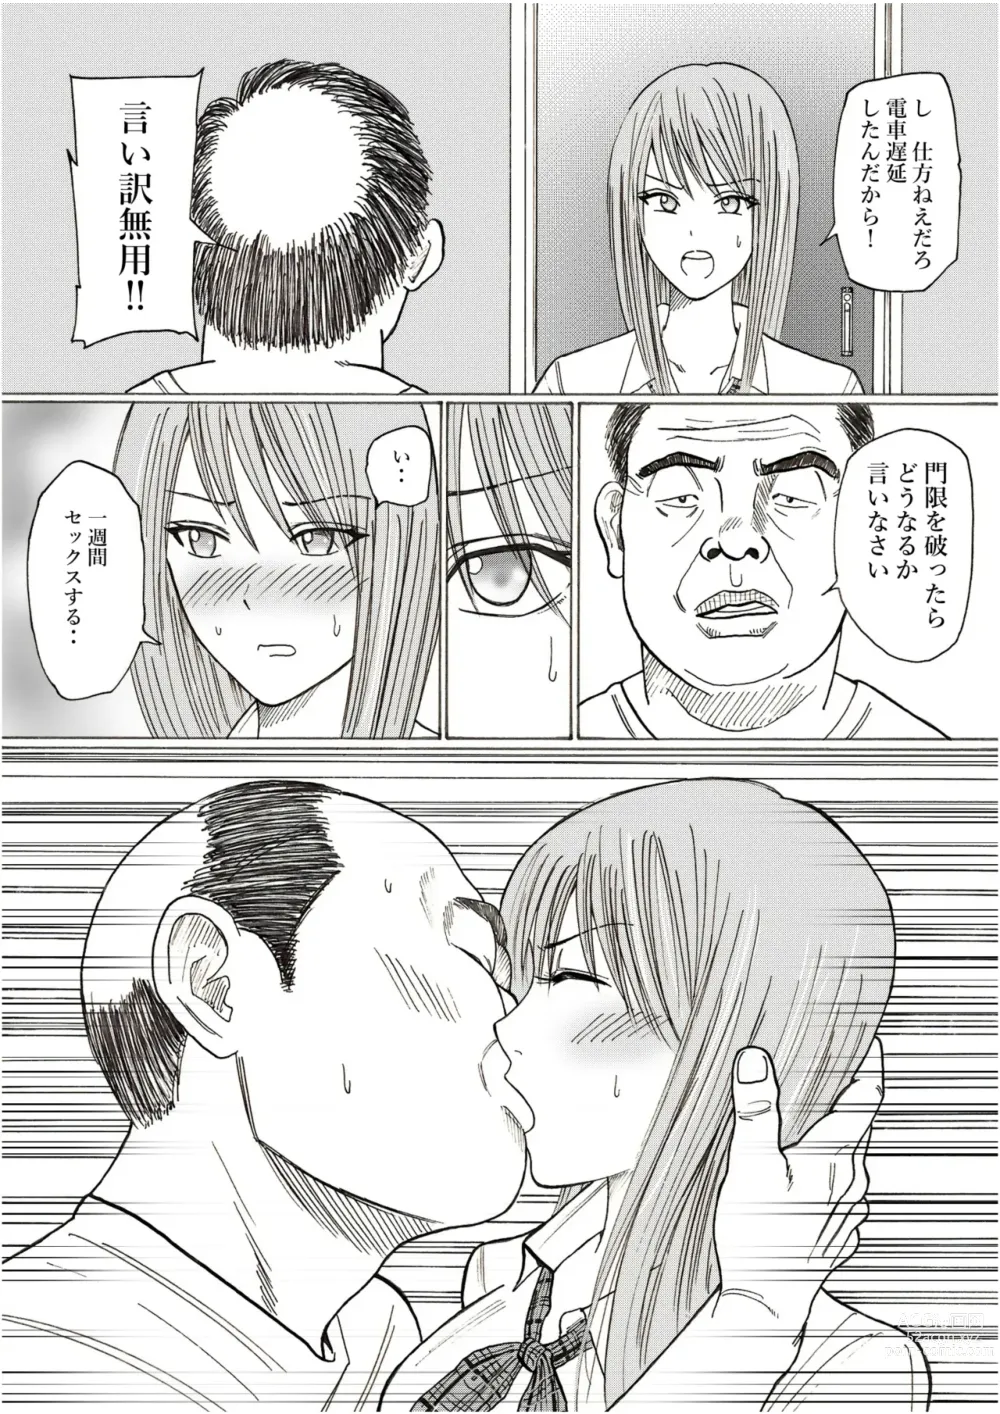 Page 14 of doujinshi Risato